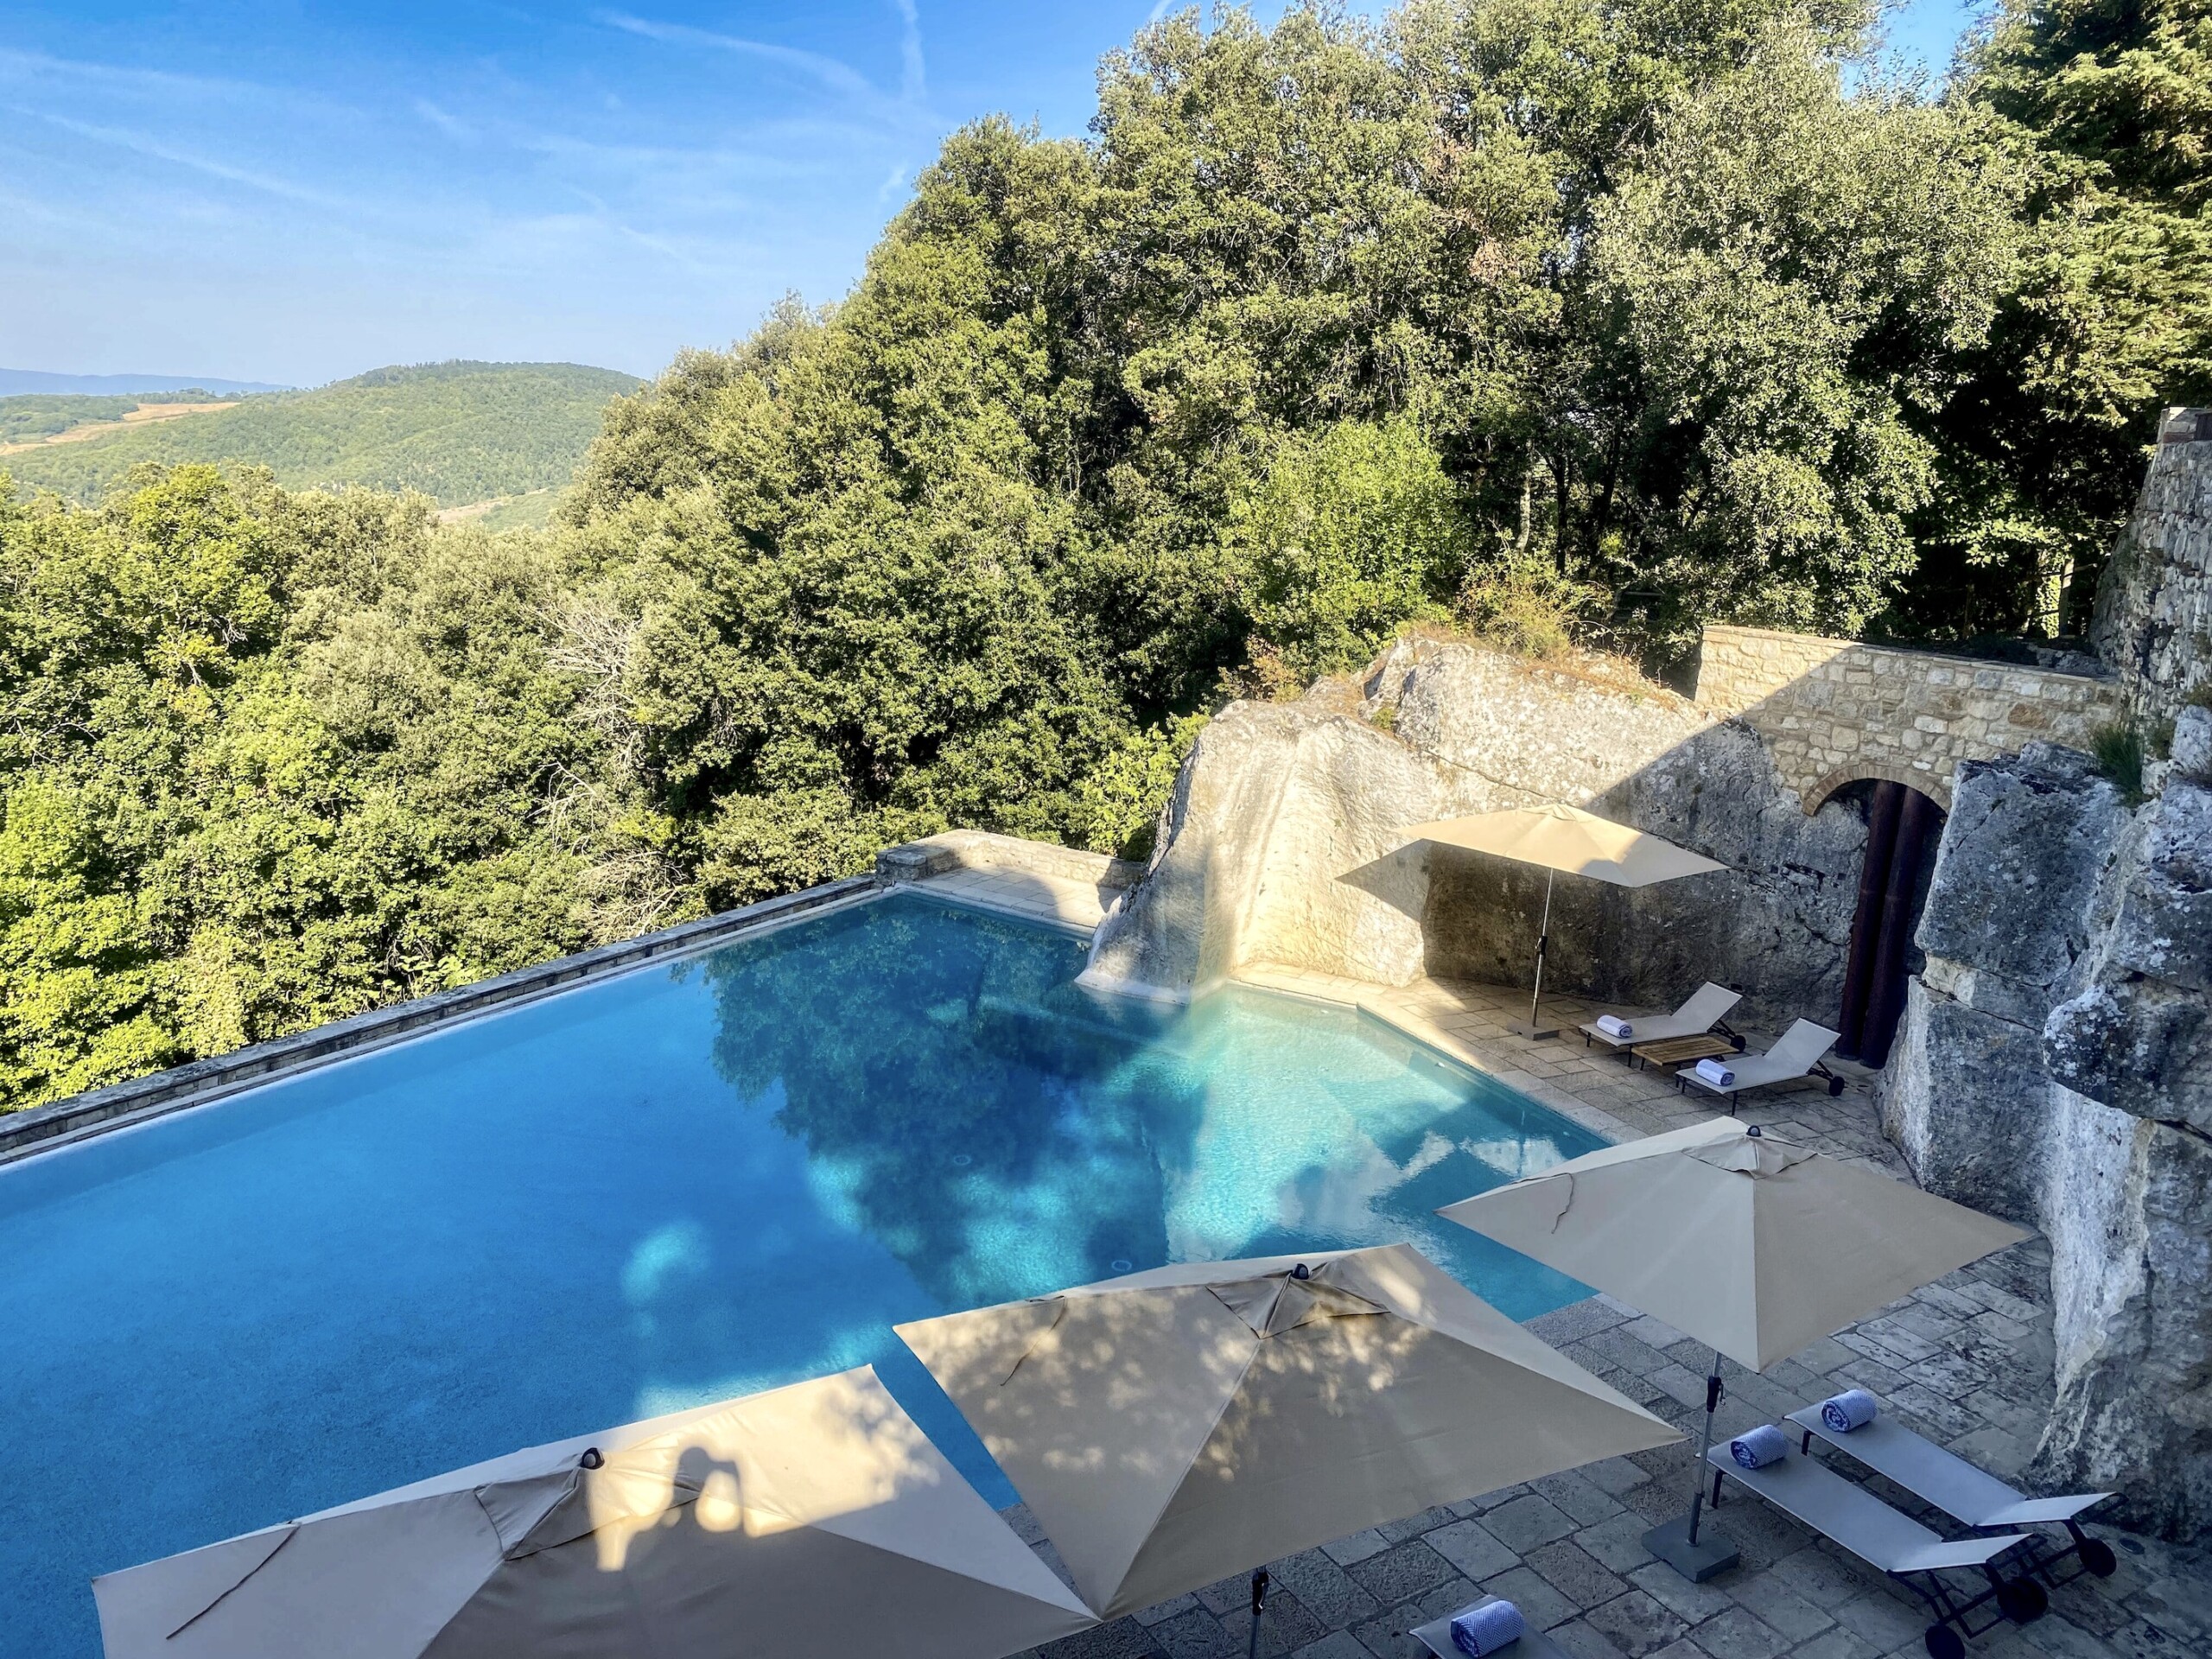 Borgo Pignano Infinity Pool from Stairs